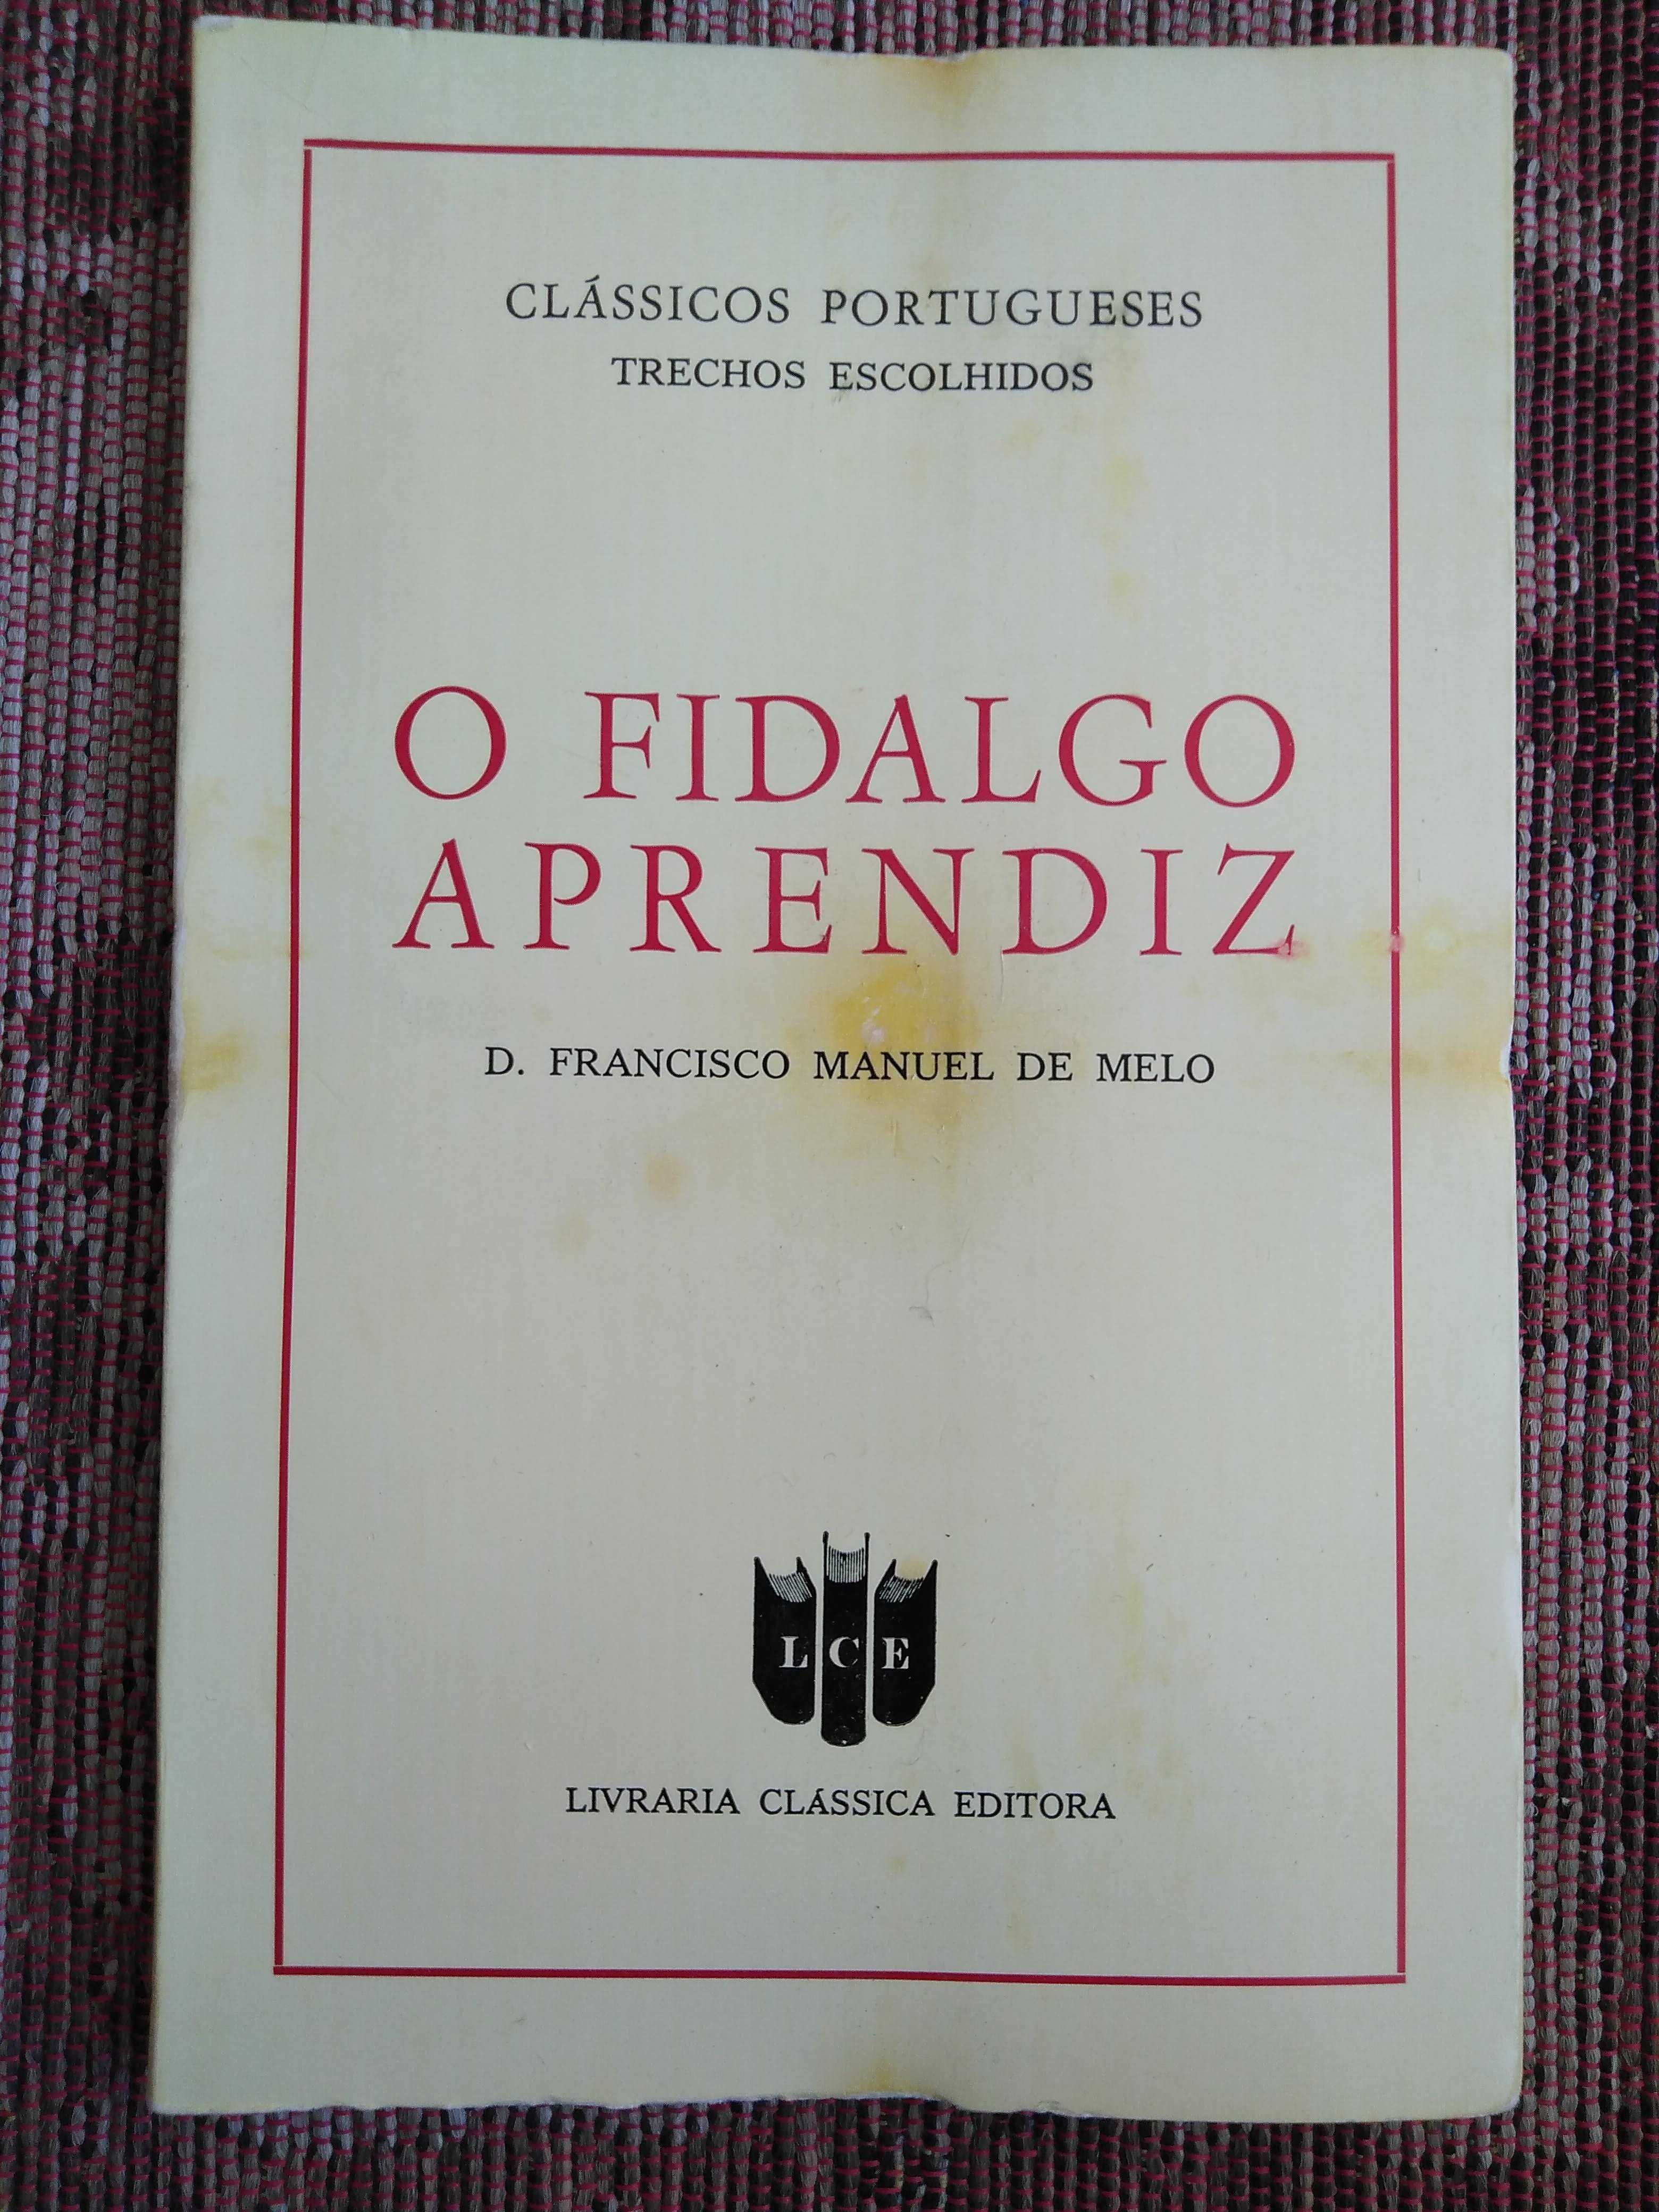 livro: D. Francisco Manuel de Melo “O fidalgo aprendiz”